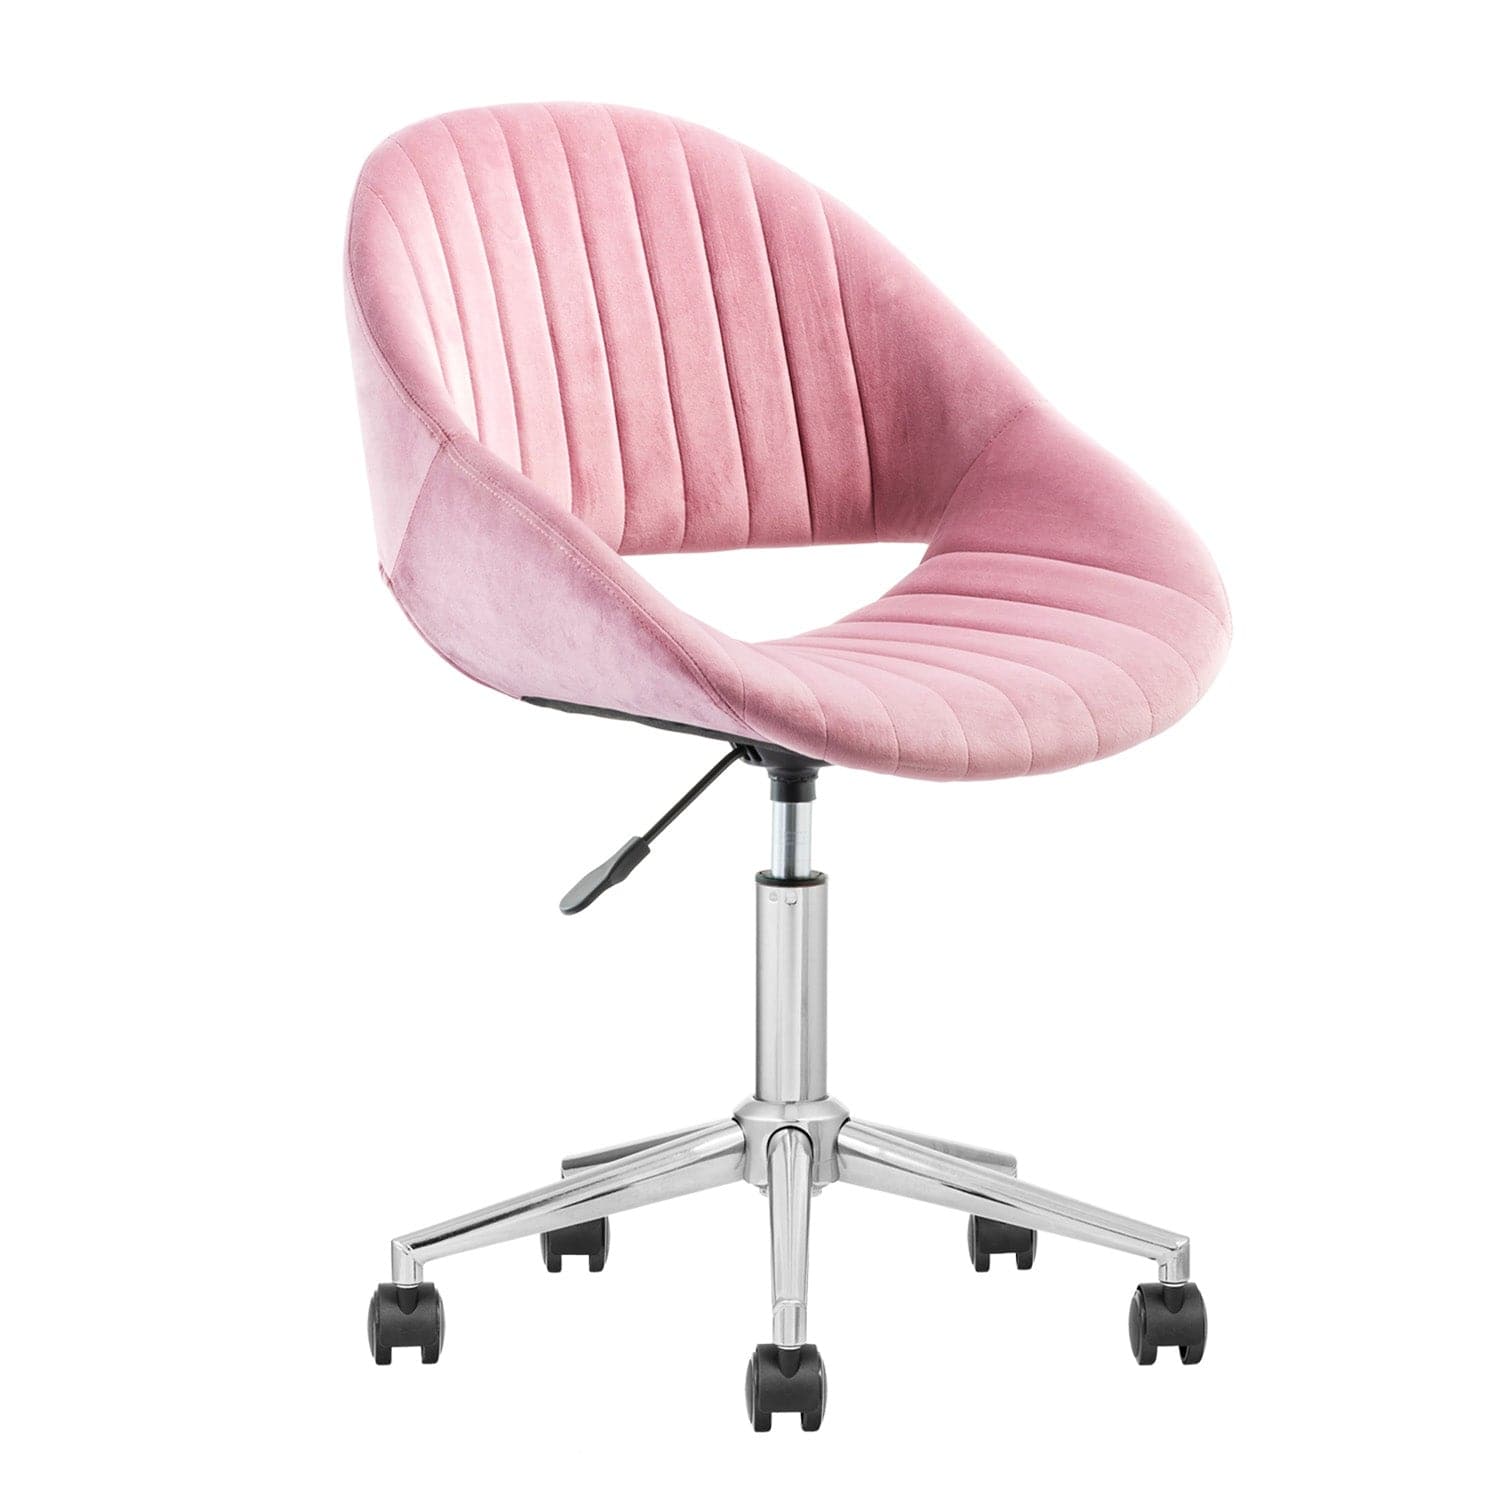 Ovios Cute Pink/Grey Cushion with Golden/Silver Base Desk Chair, Task Chair, Computer Desk Chair